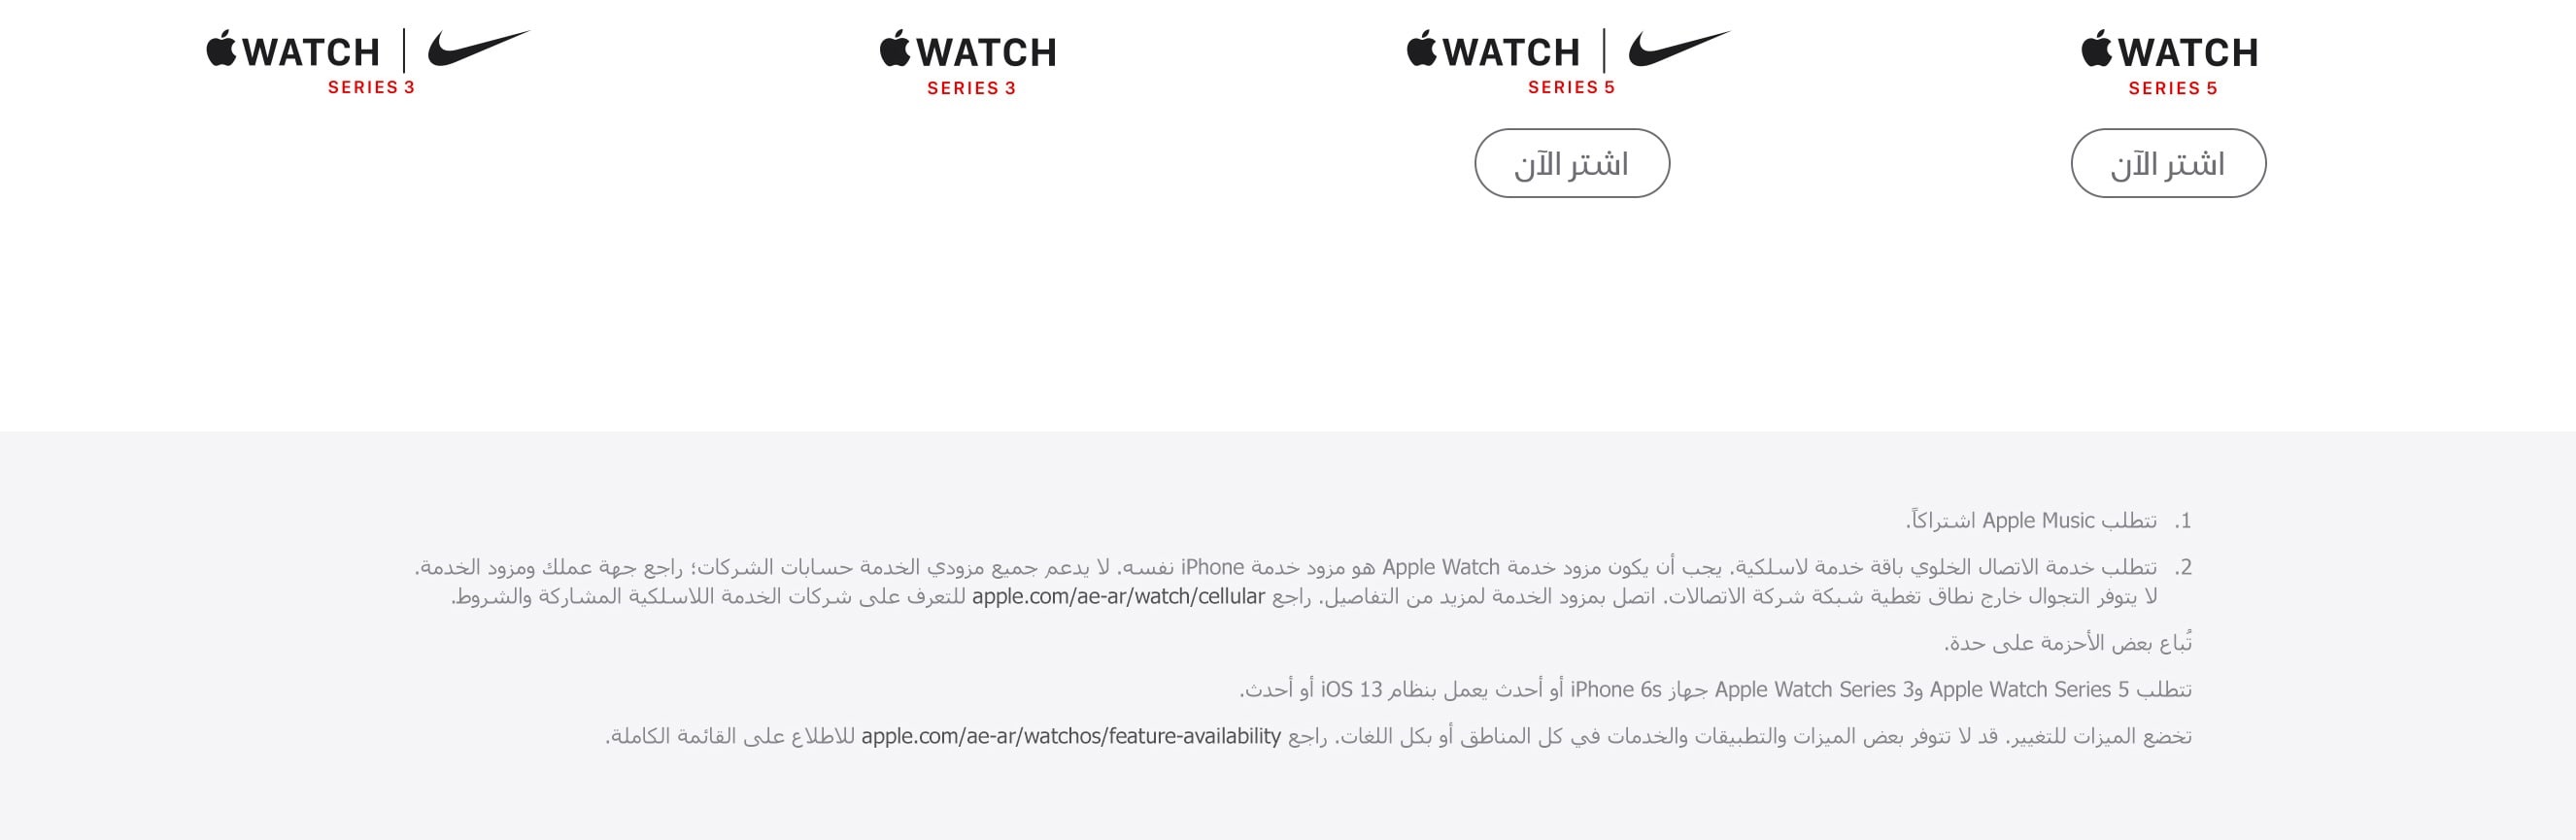 apple-watch-series5-price-etisalat-uae-overview-ar-7